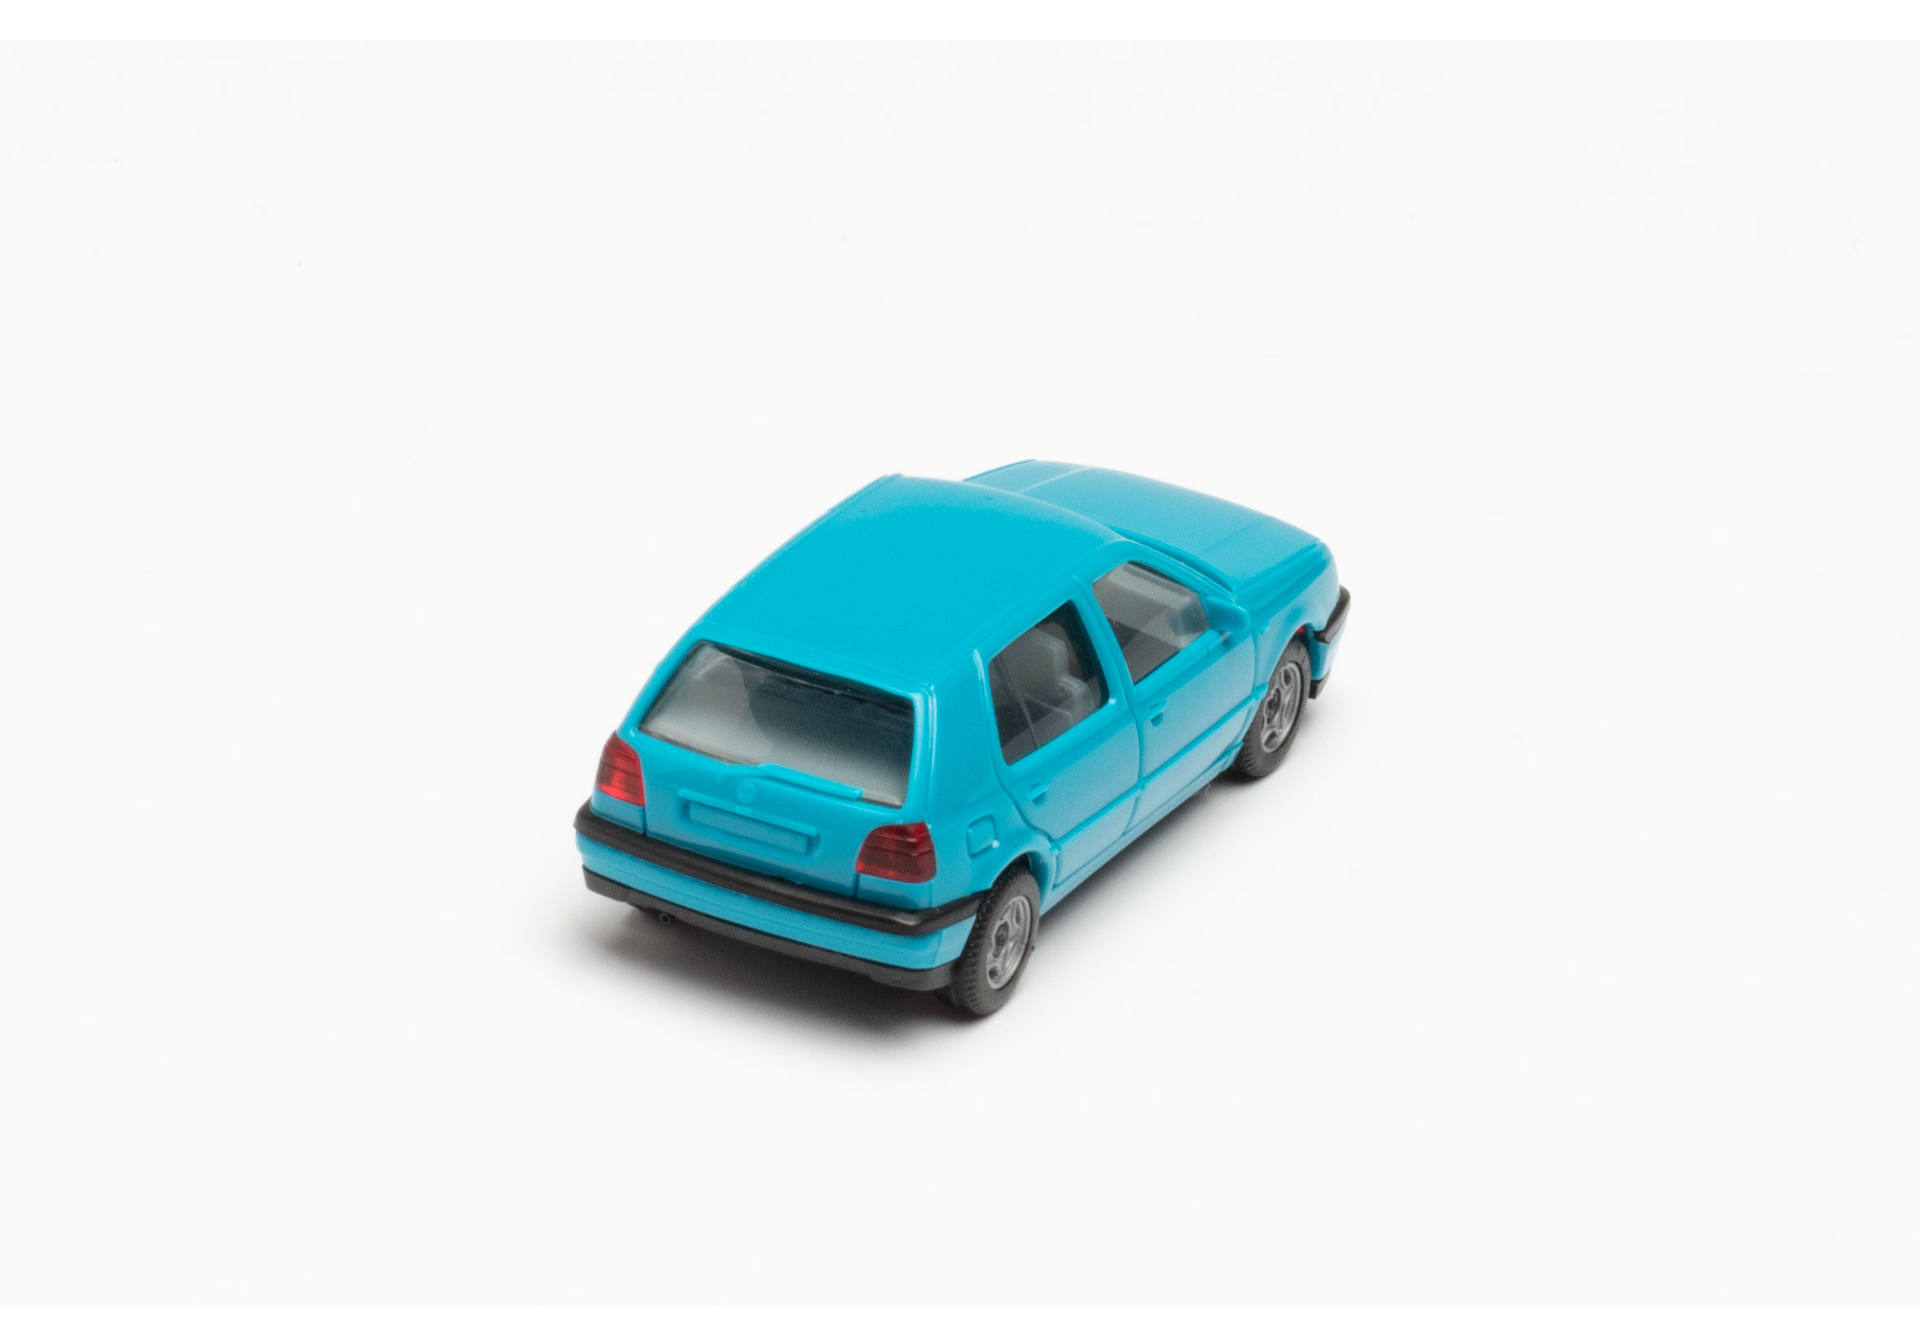 Minikit VW Golf III, blue turquoise